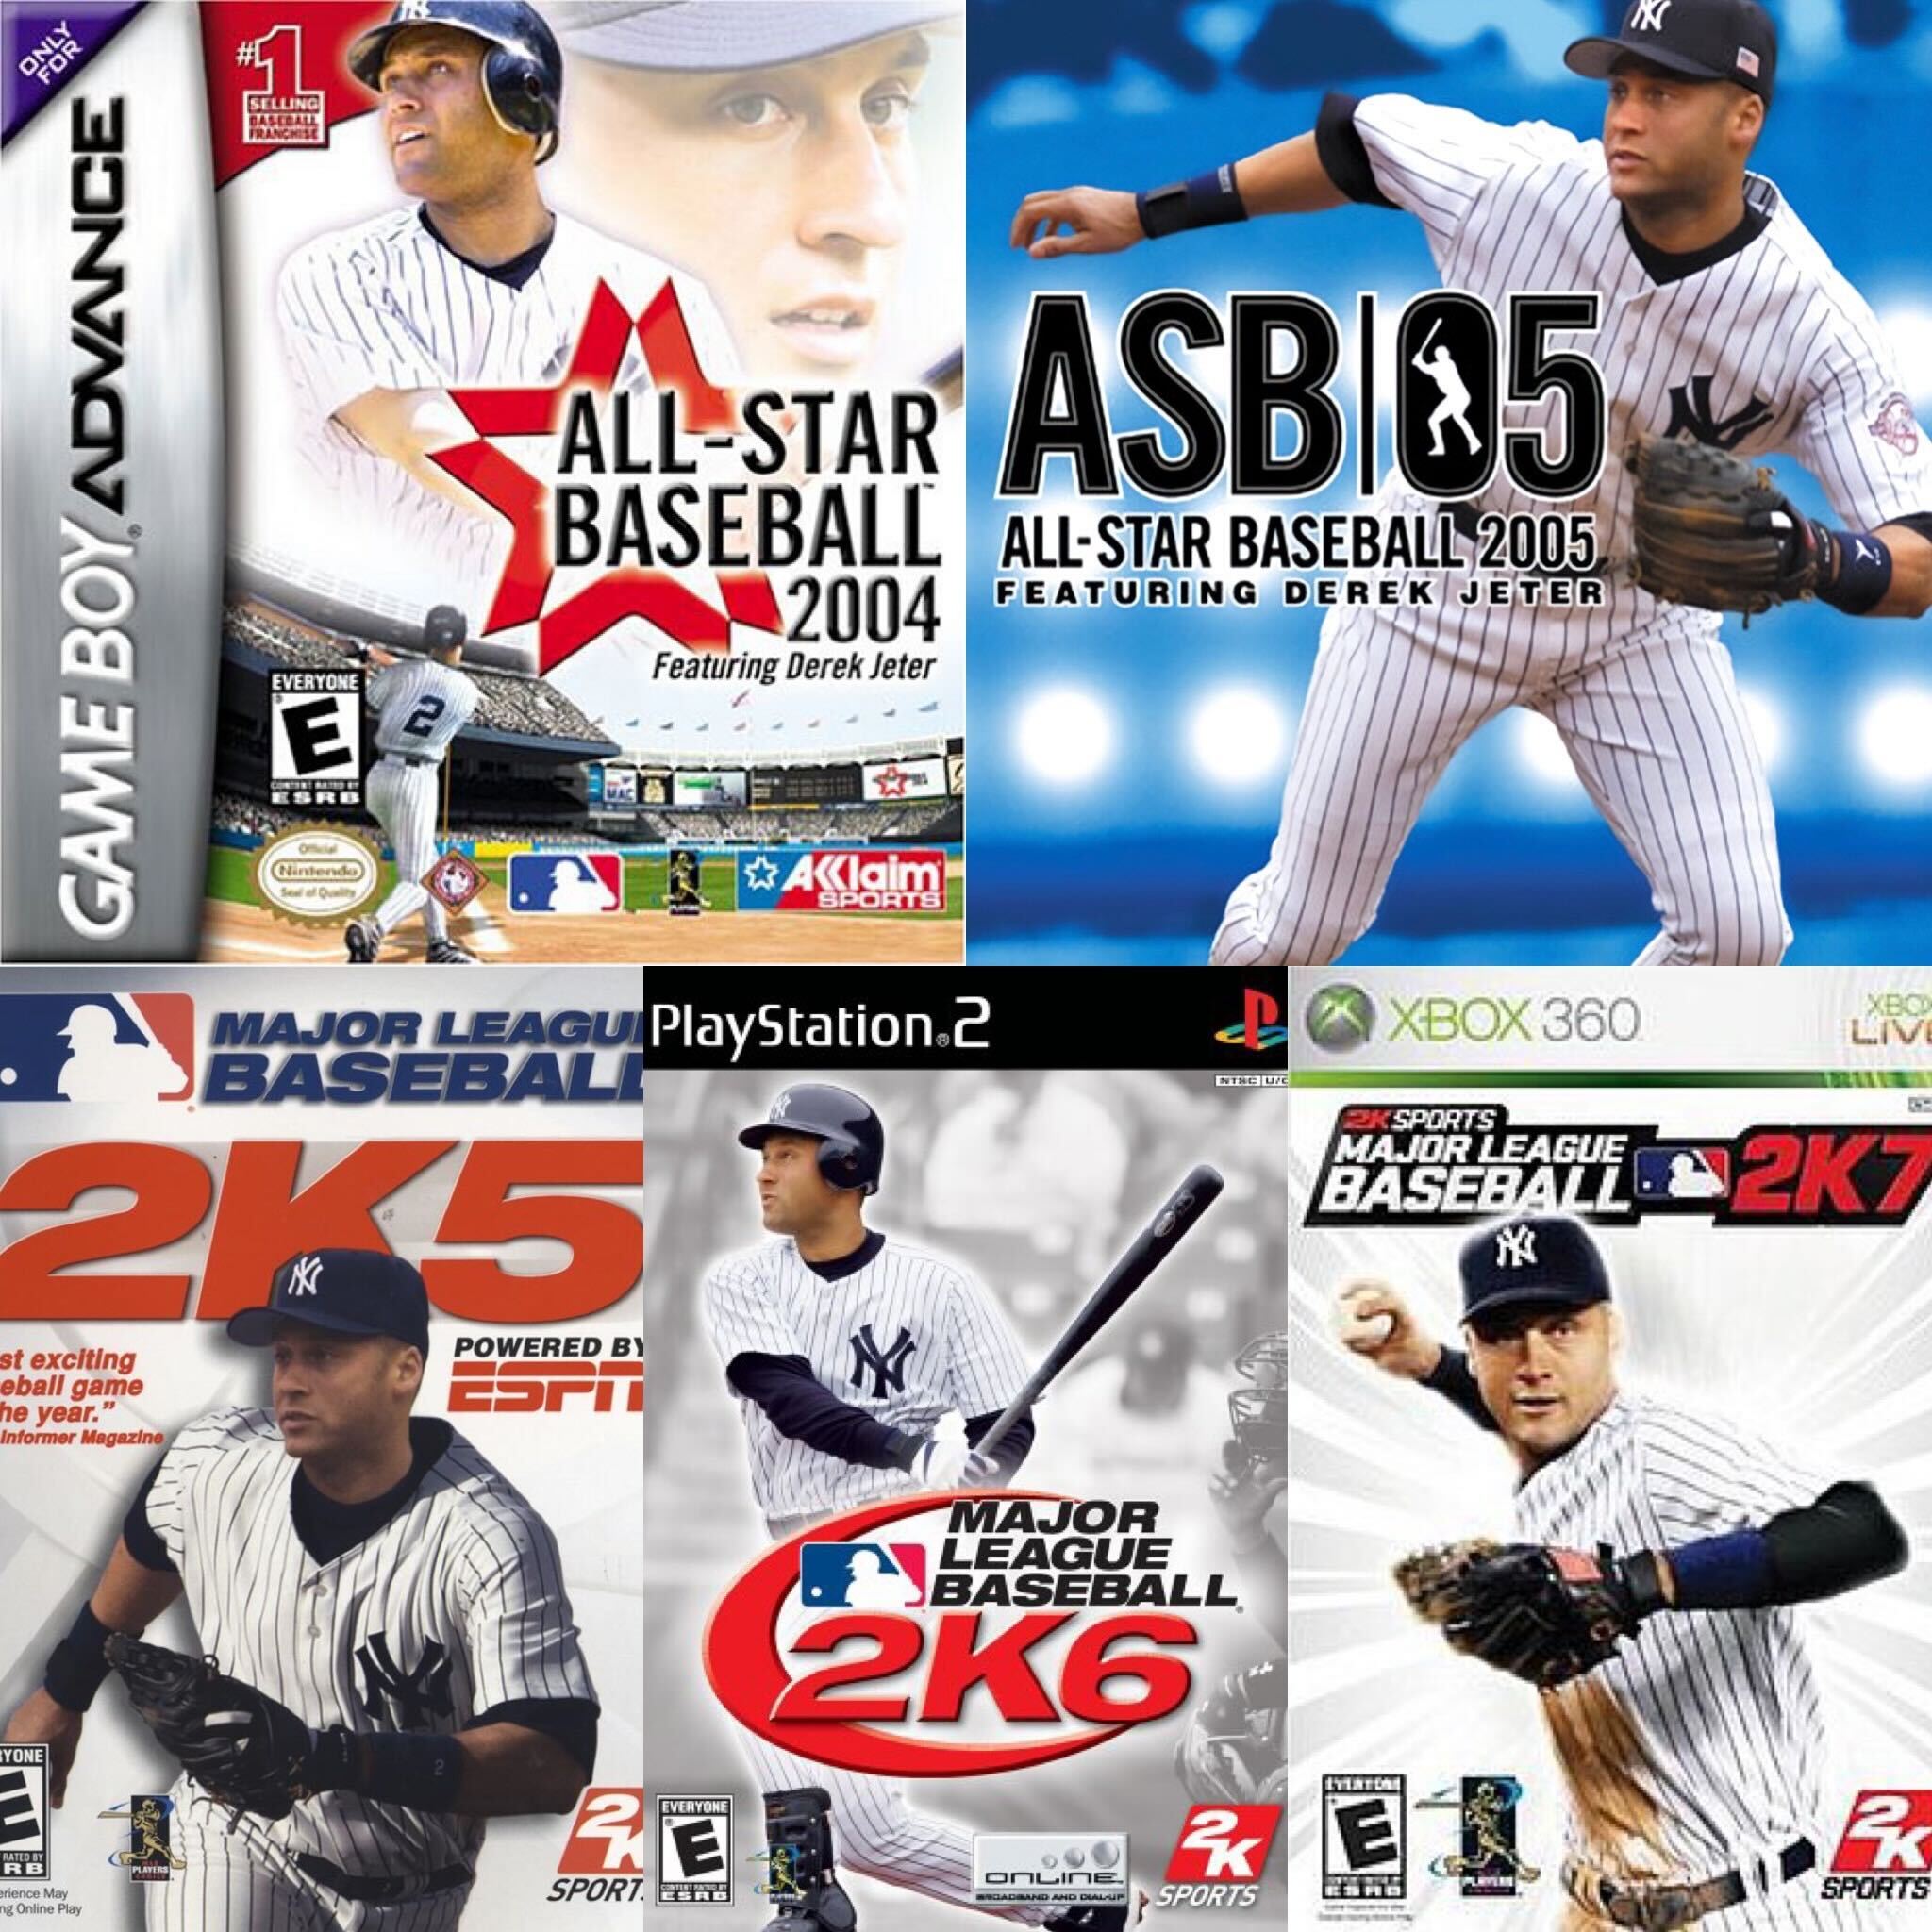  All Star Baseball 2004 : Video Games